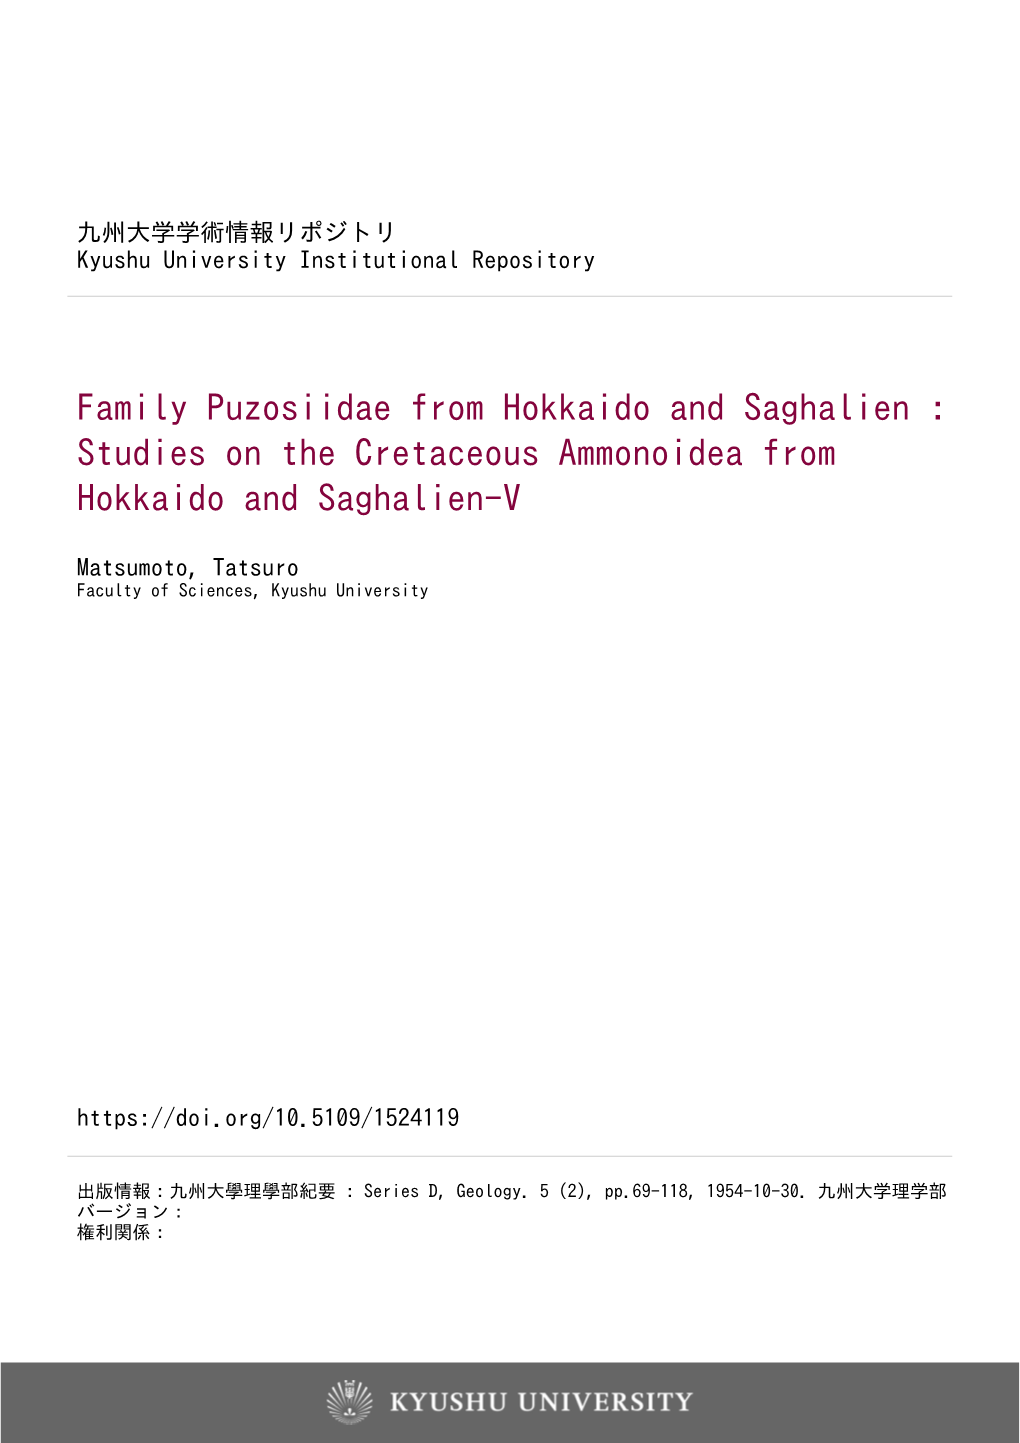 Family Puzosiidae from Hokkaido and Saghalien : Studies on the Cretaceous Ammonoidea from Hokkaido and Saghalien-V